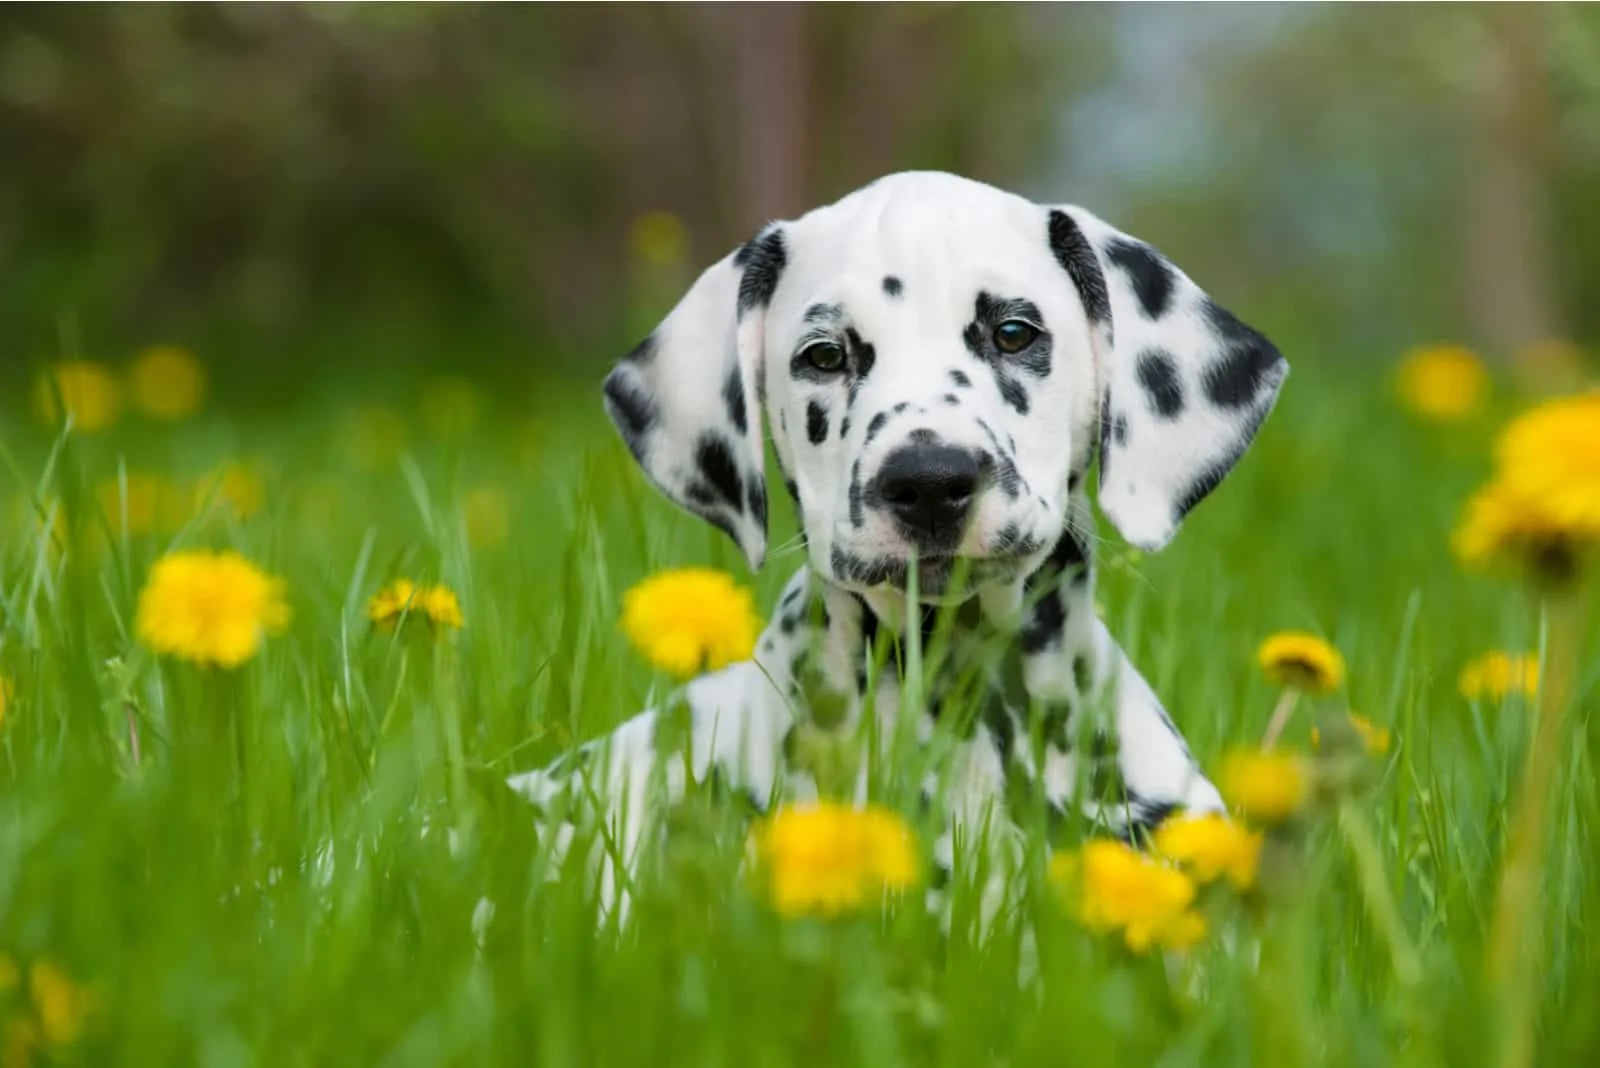 Dalmatian dog lying on the grass